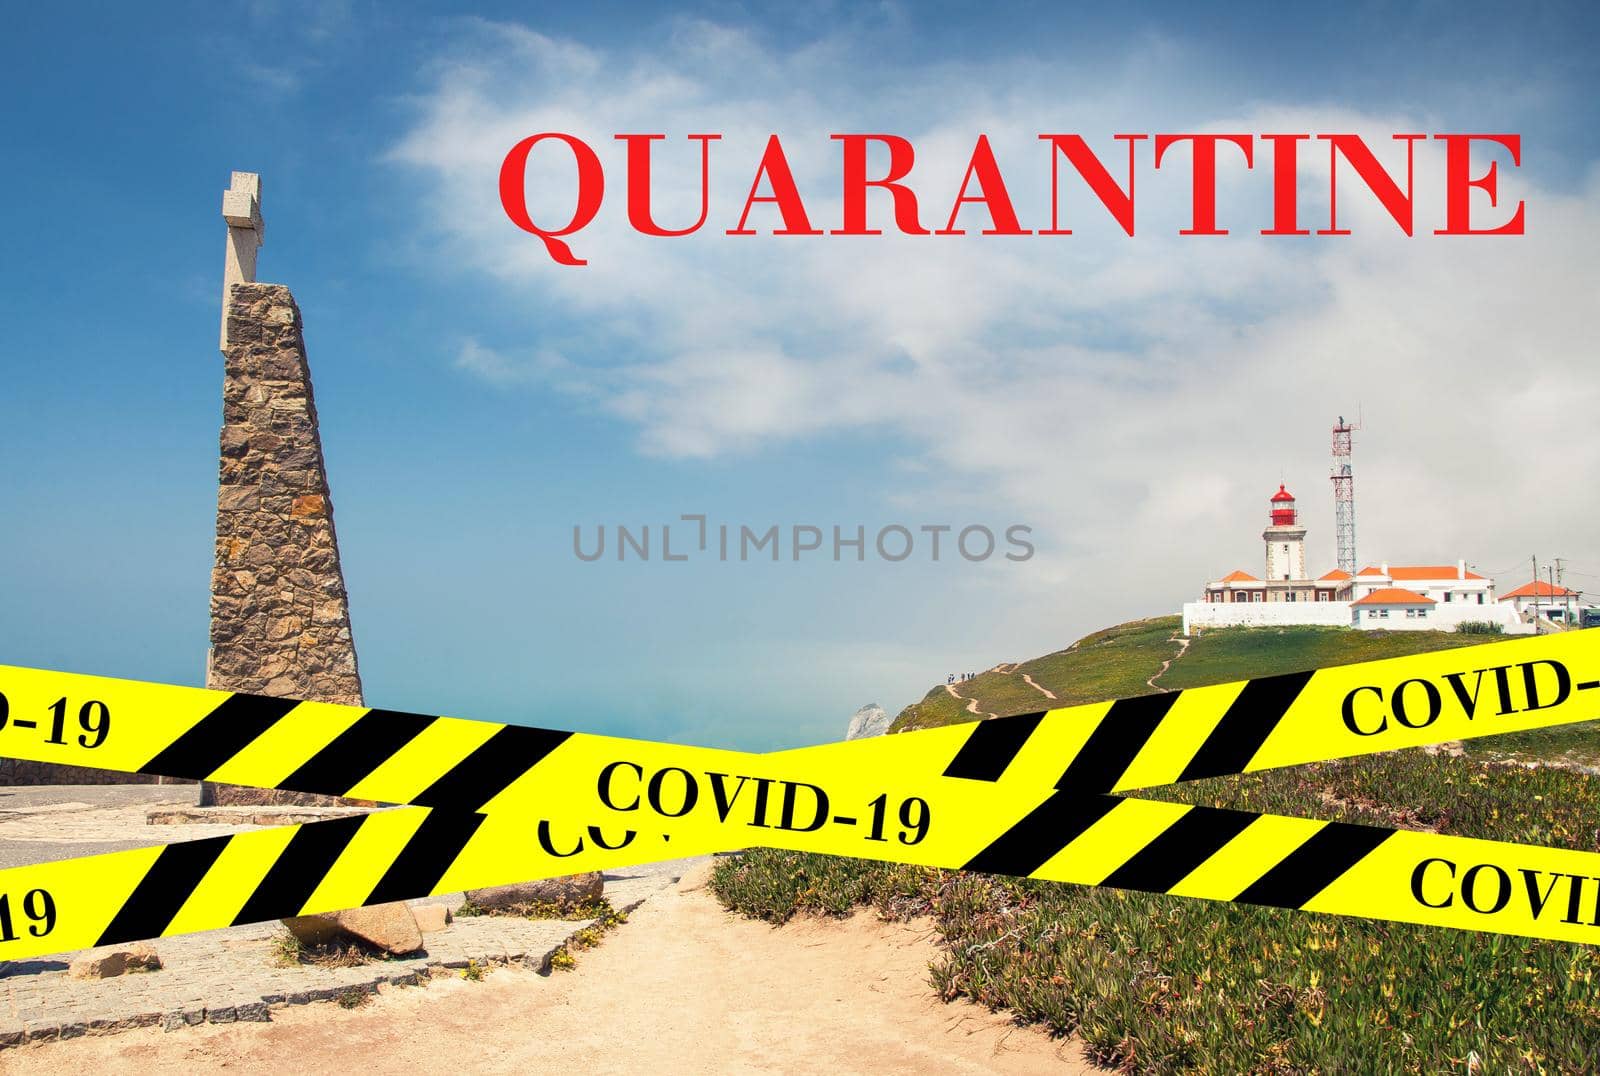 Quarantine in Portugal. No travel and lockdown concept. by Aliaksandr_Antanovich